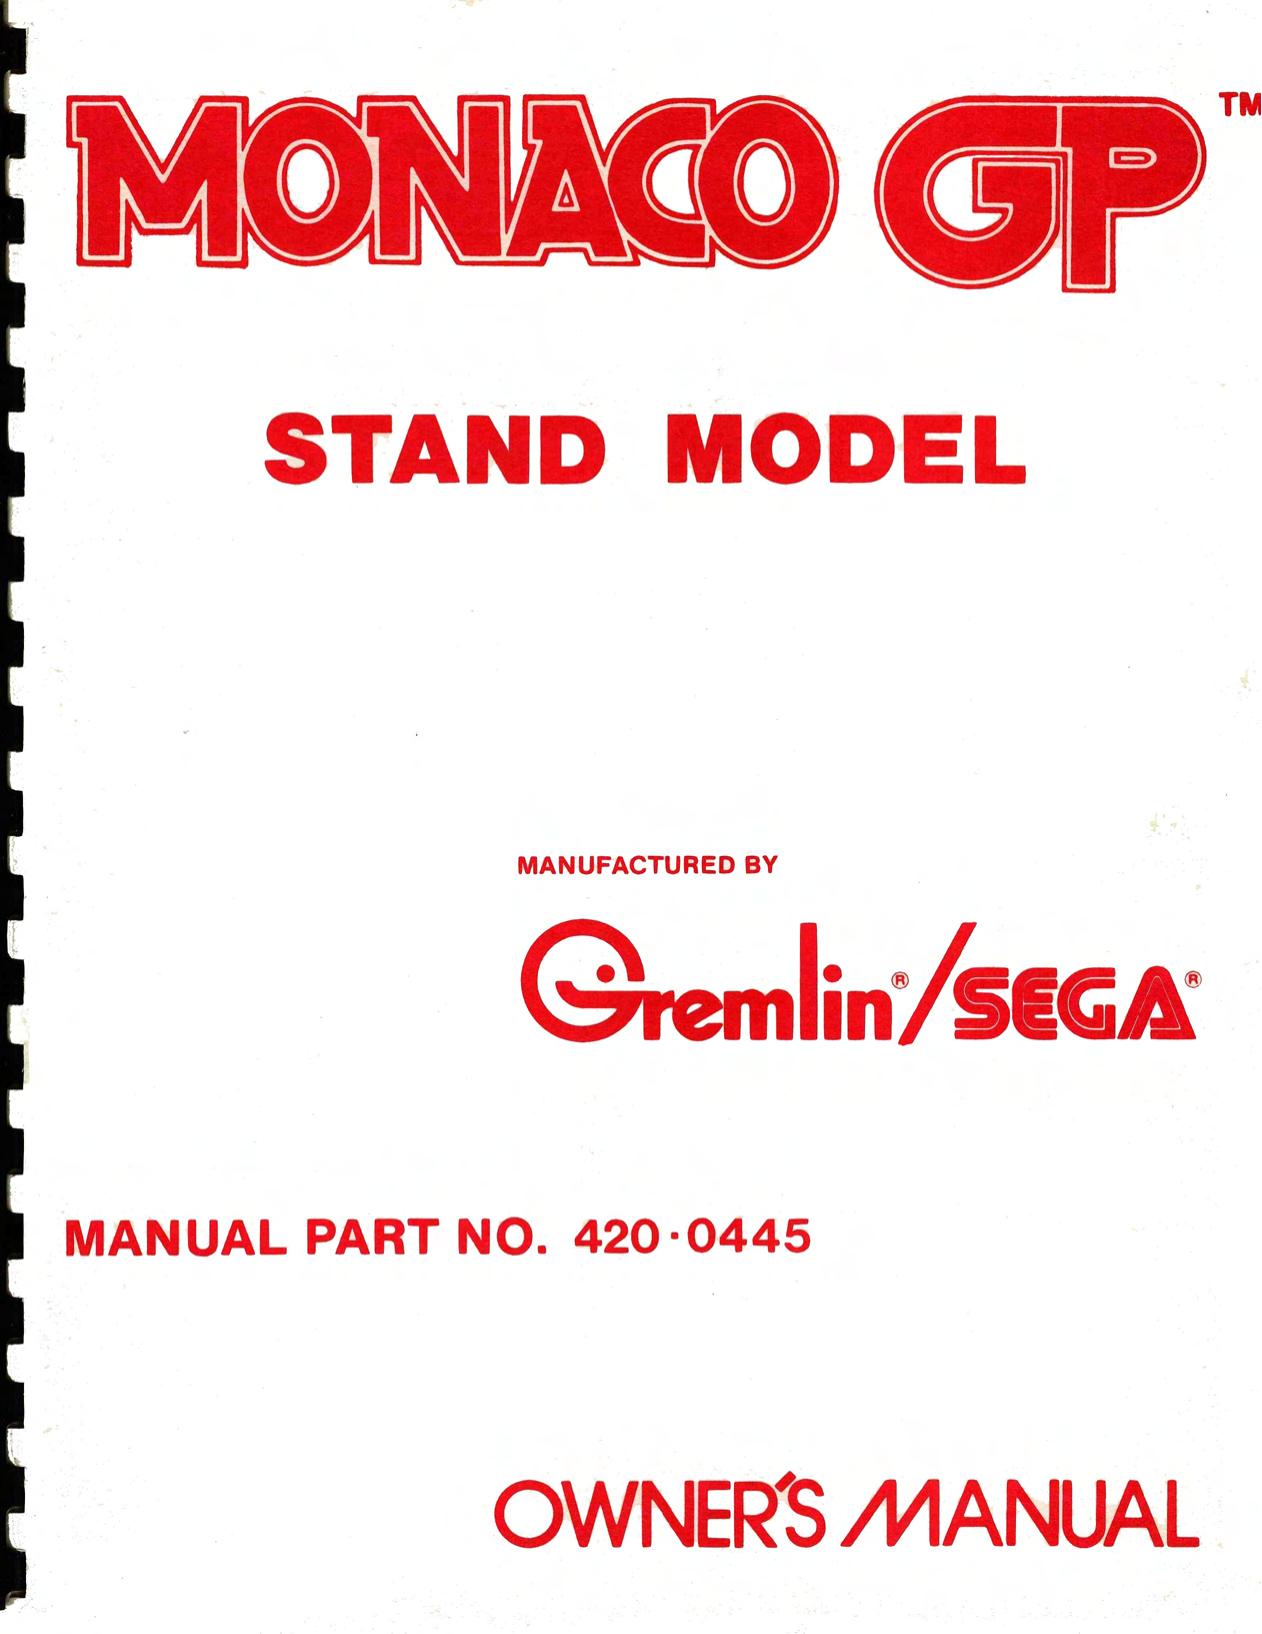 Monaco GP Stand Model (420-0445)